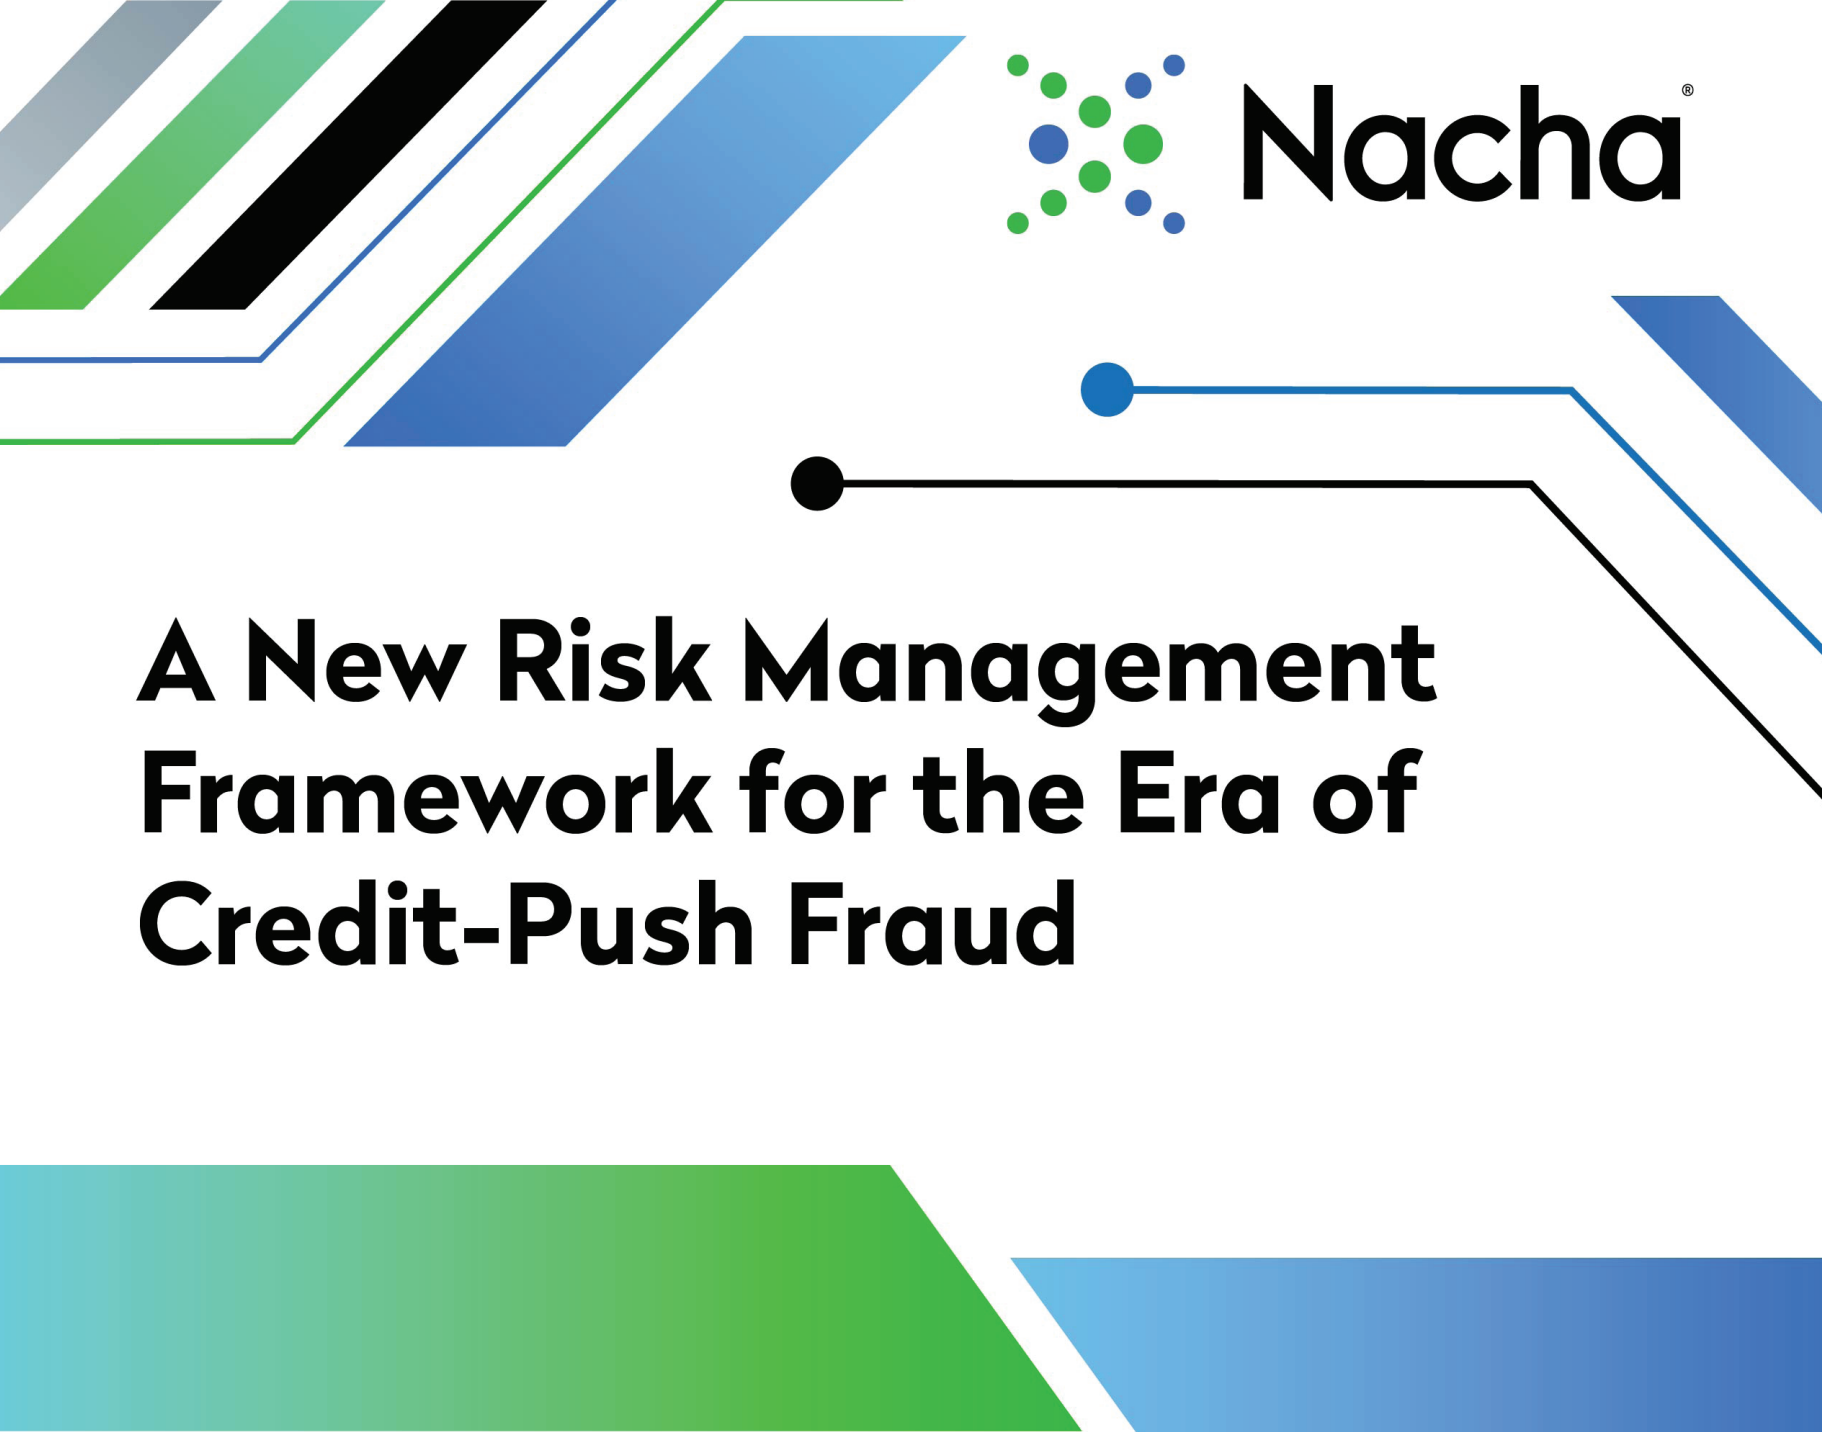 Nacha Announces New Risk Management Framework for the Era of Credit-Push Fraud